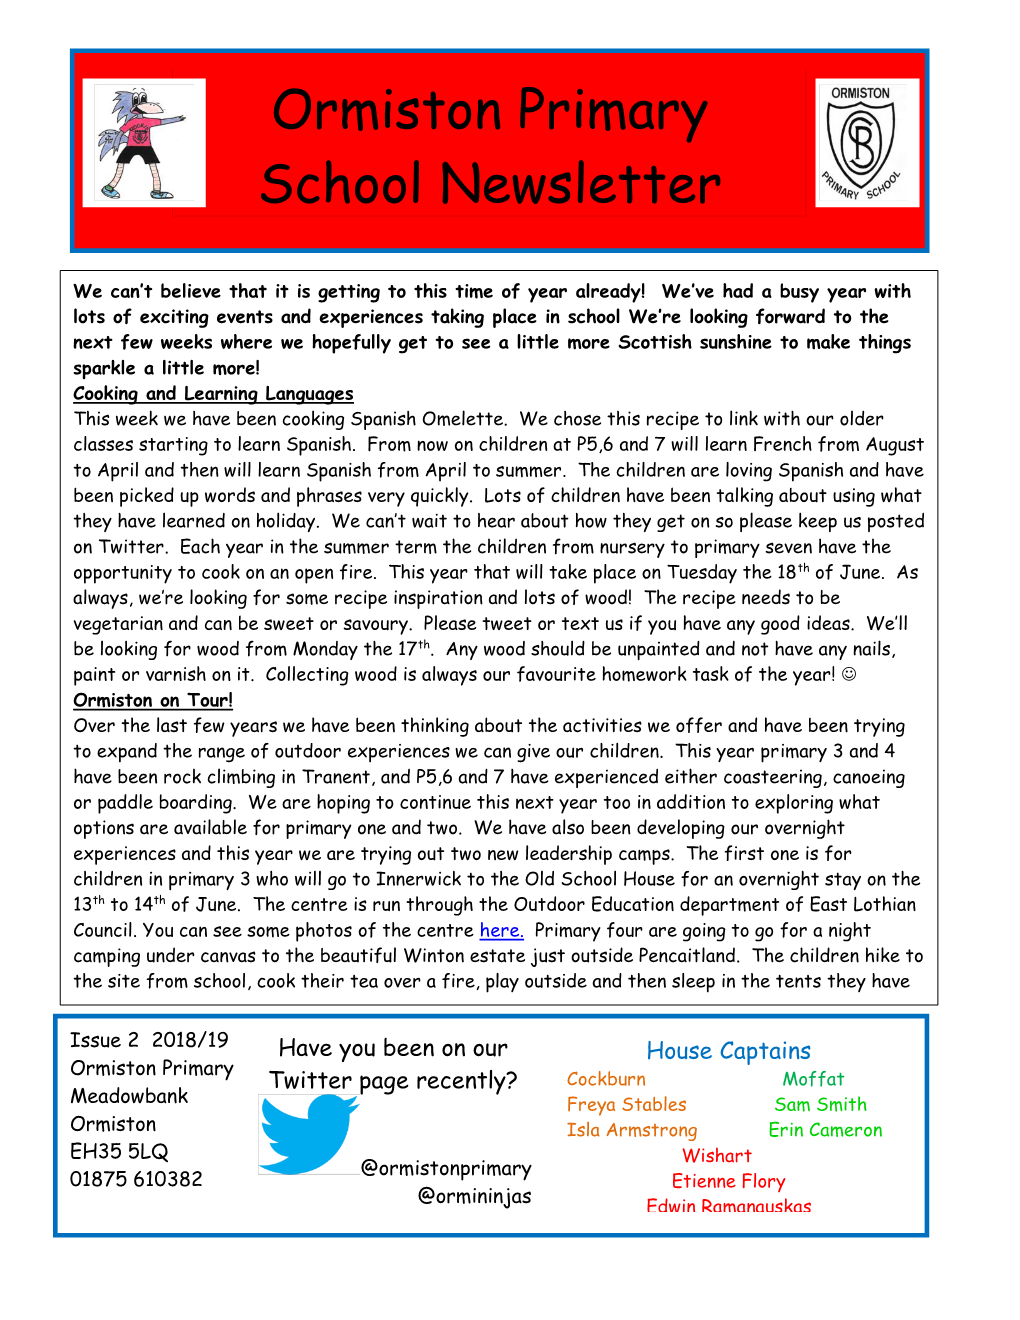 Ormiston Primary School Newsletter